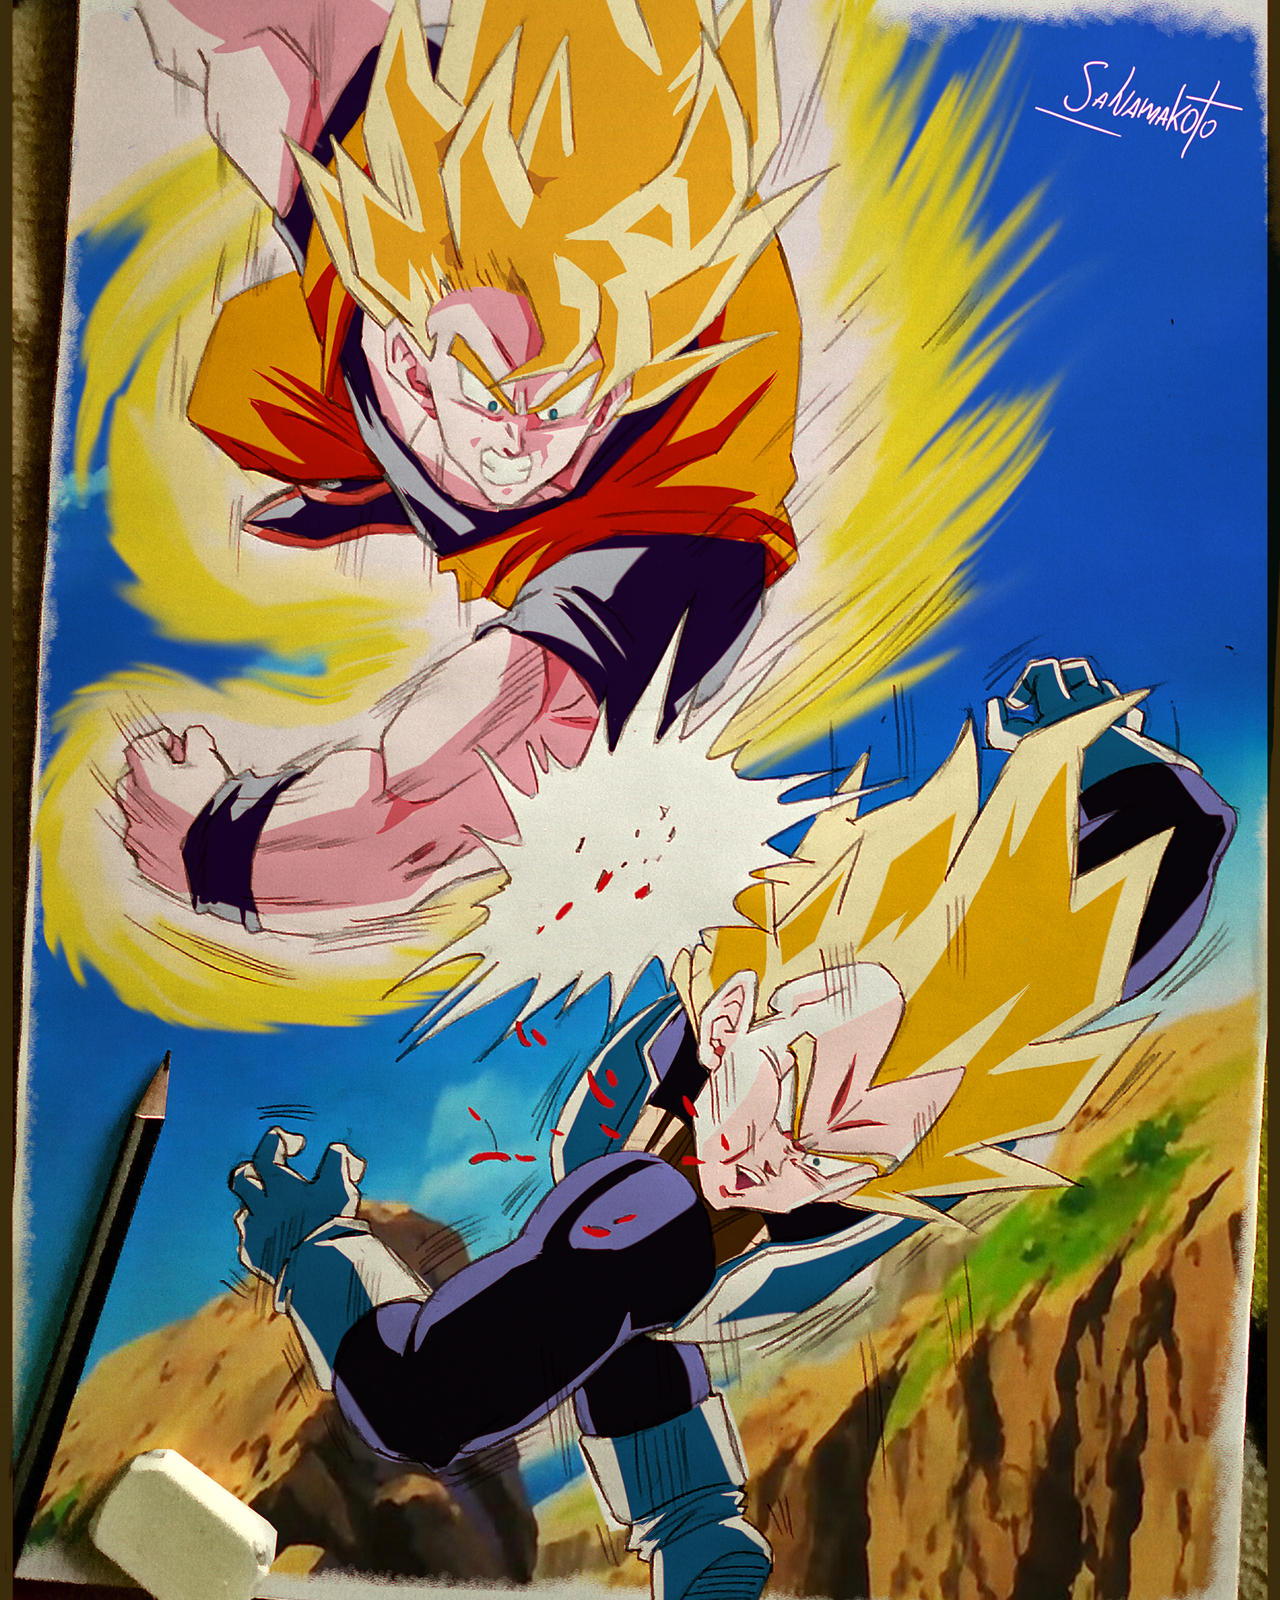 Goku ssj vs vegeta ssj by salvamakoto on DeviantArt